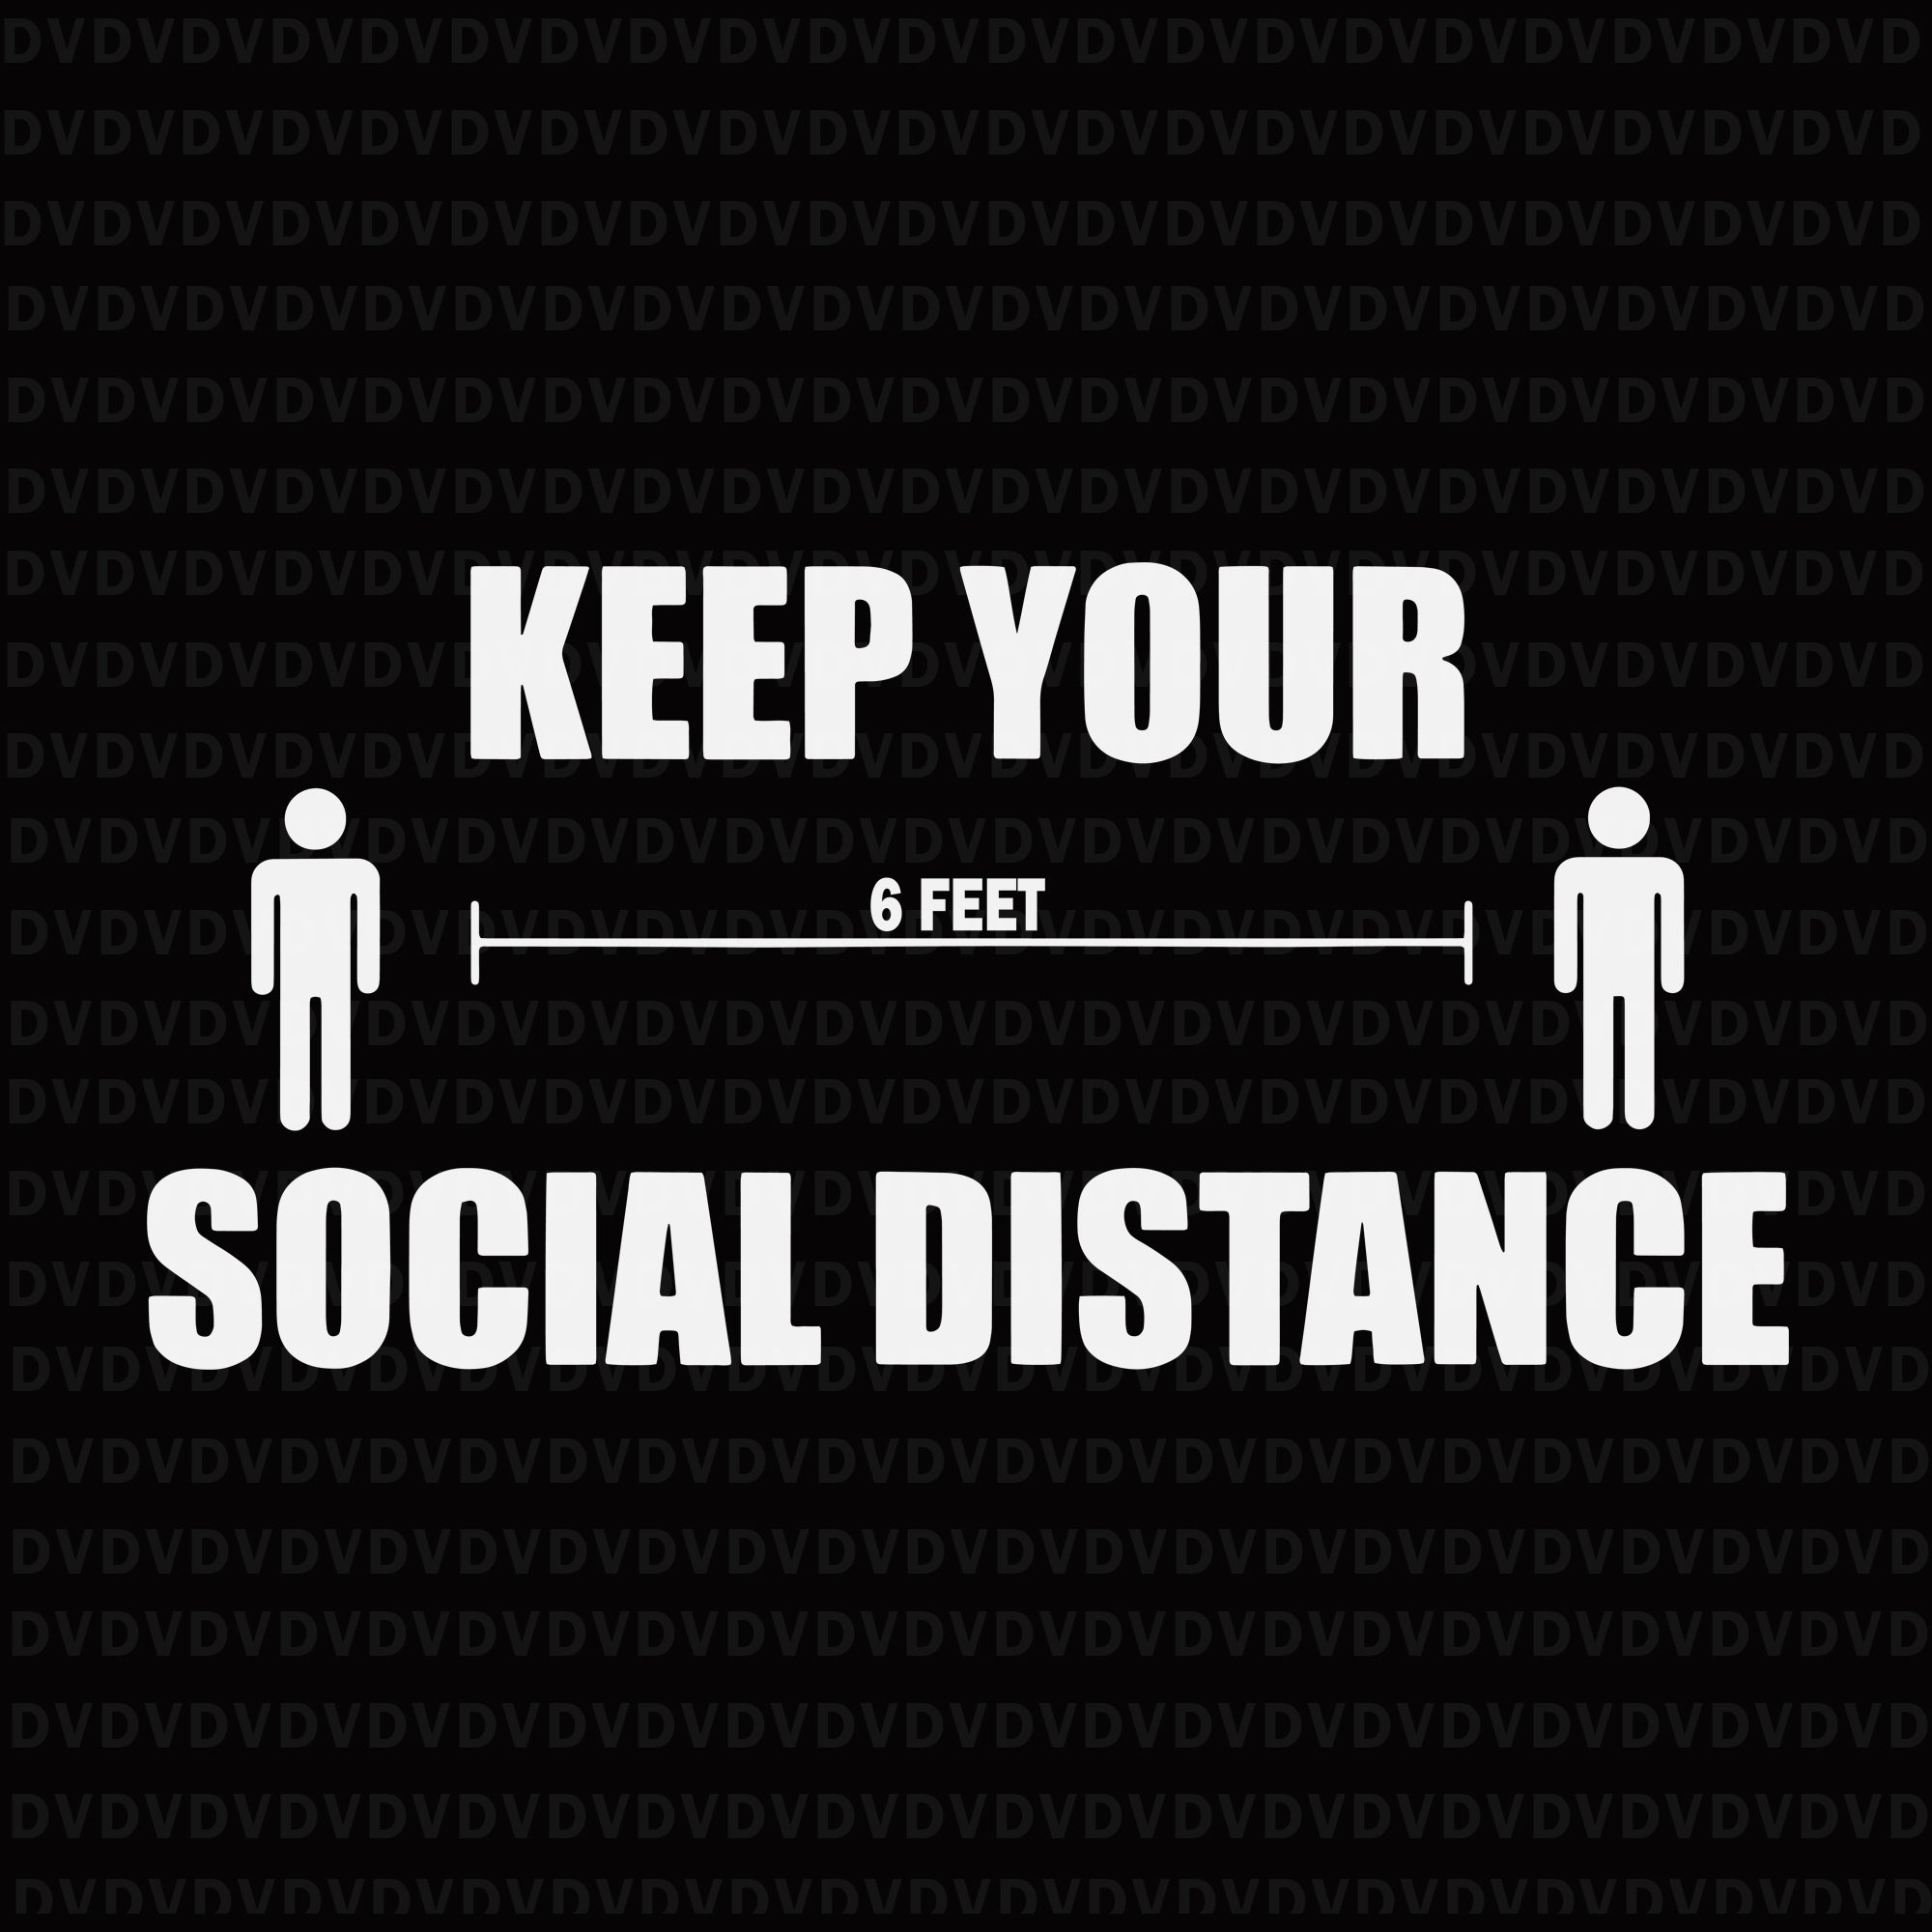 Keep Your 6 Feet Social Distance Svg Keep Your 6 Feet Social Distance Buydesigntshirt